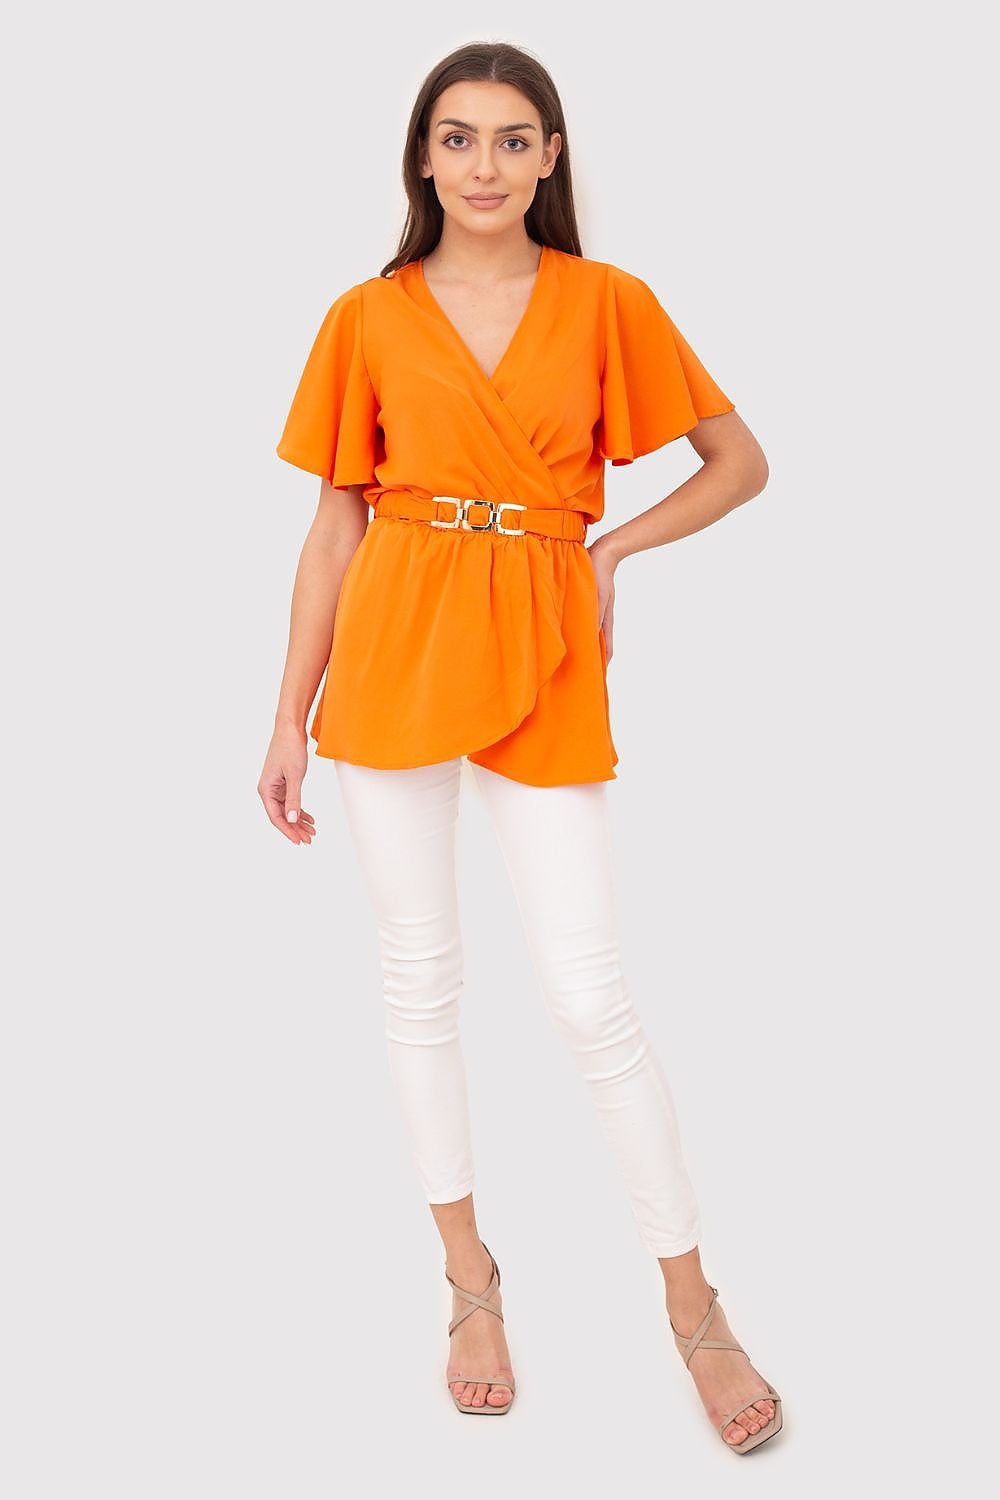 V-neck orange striped blouse